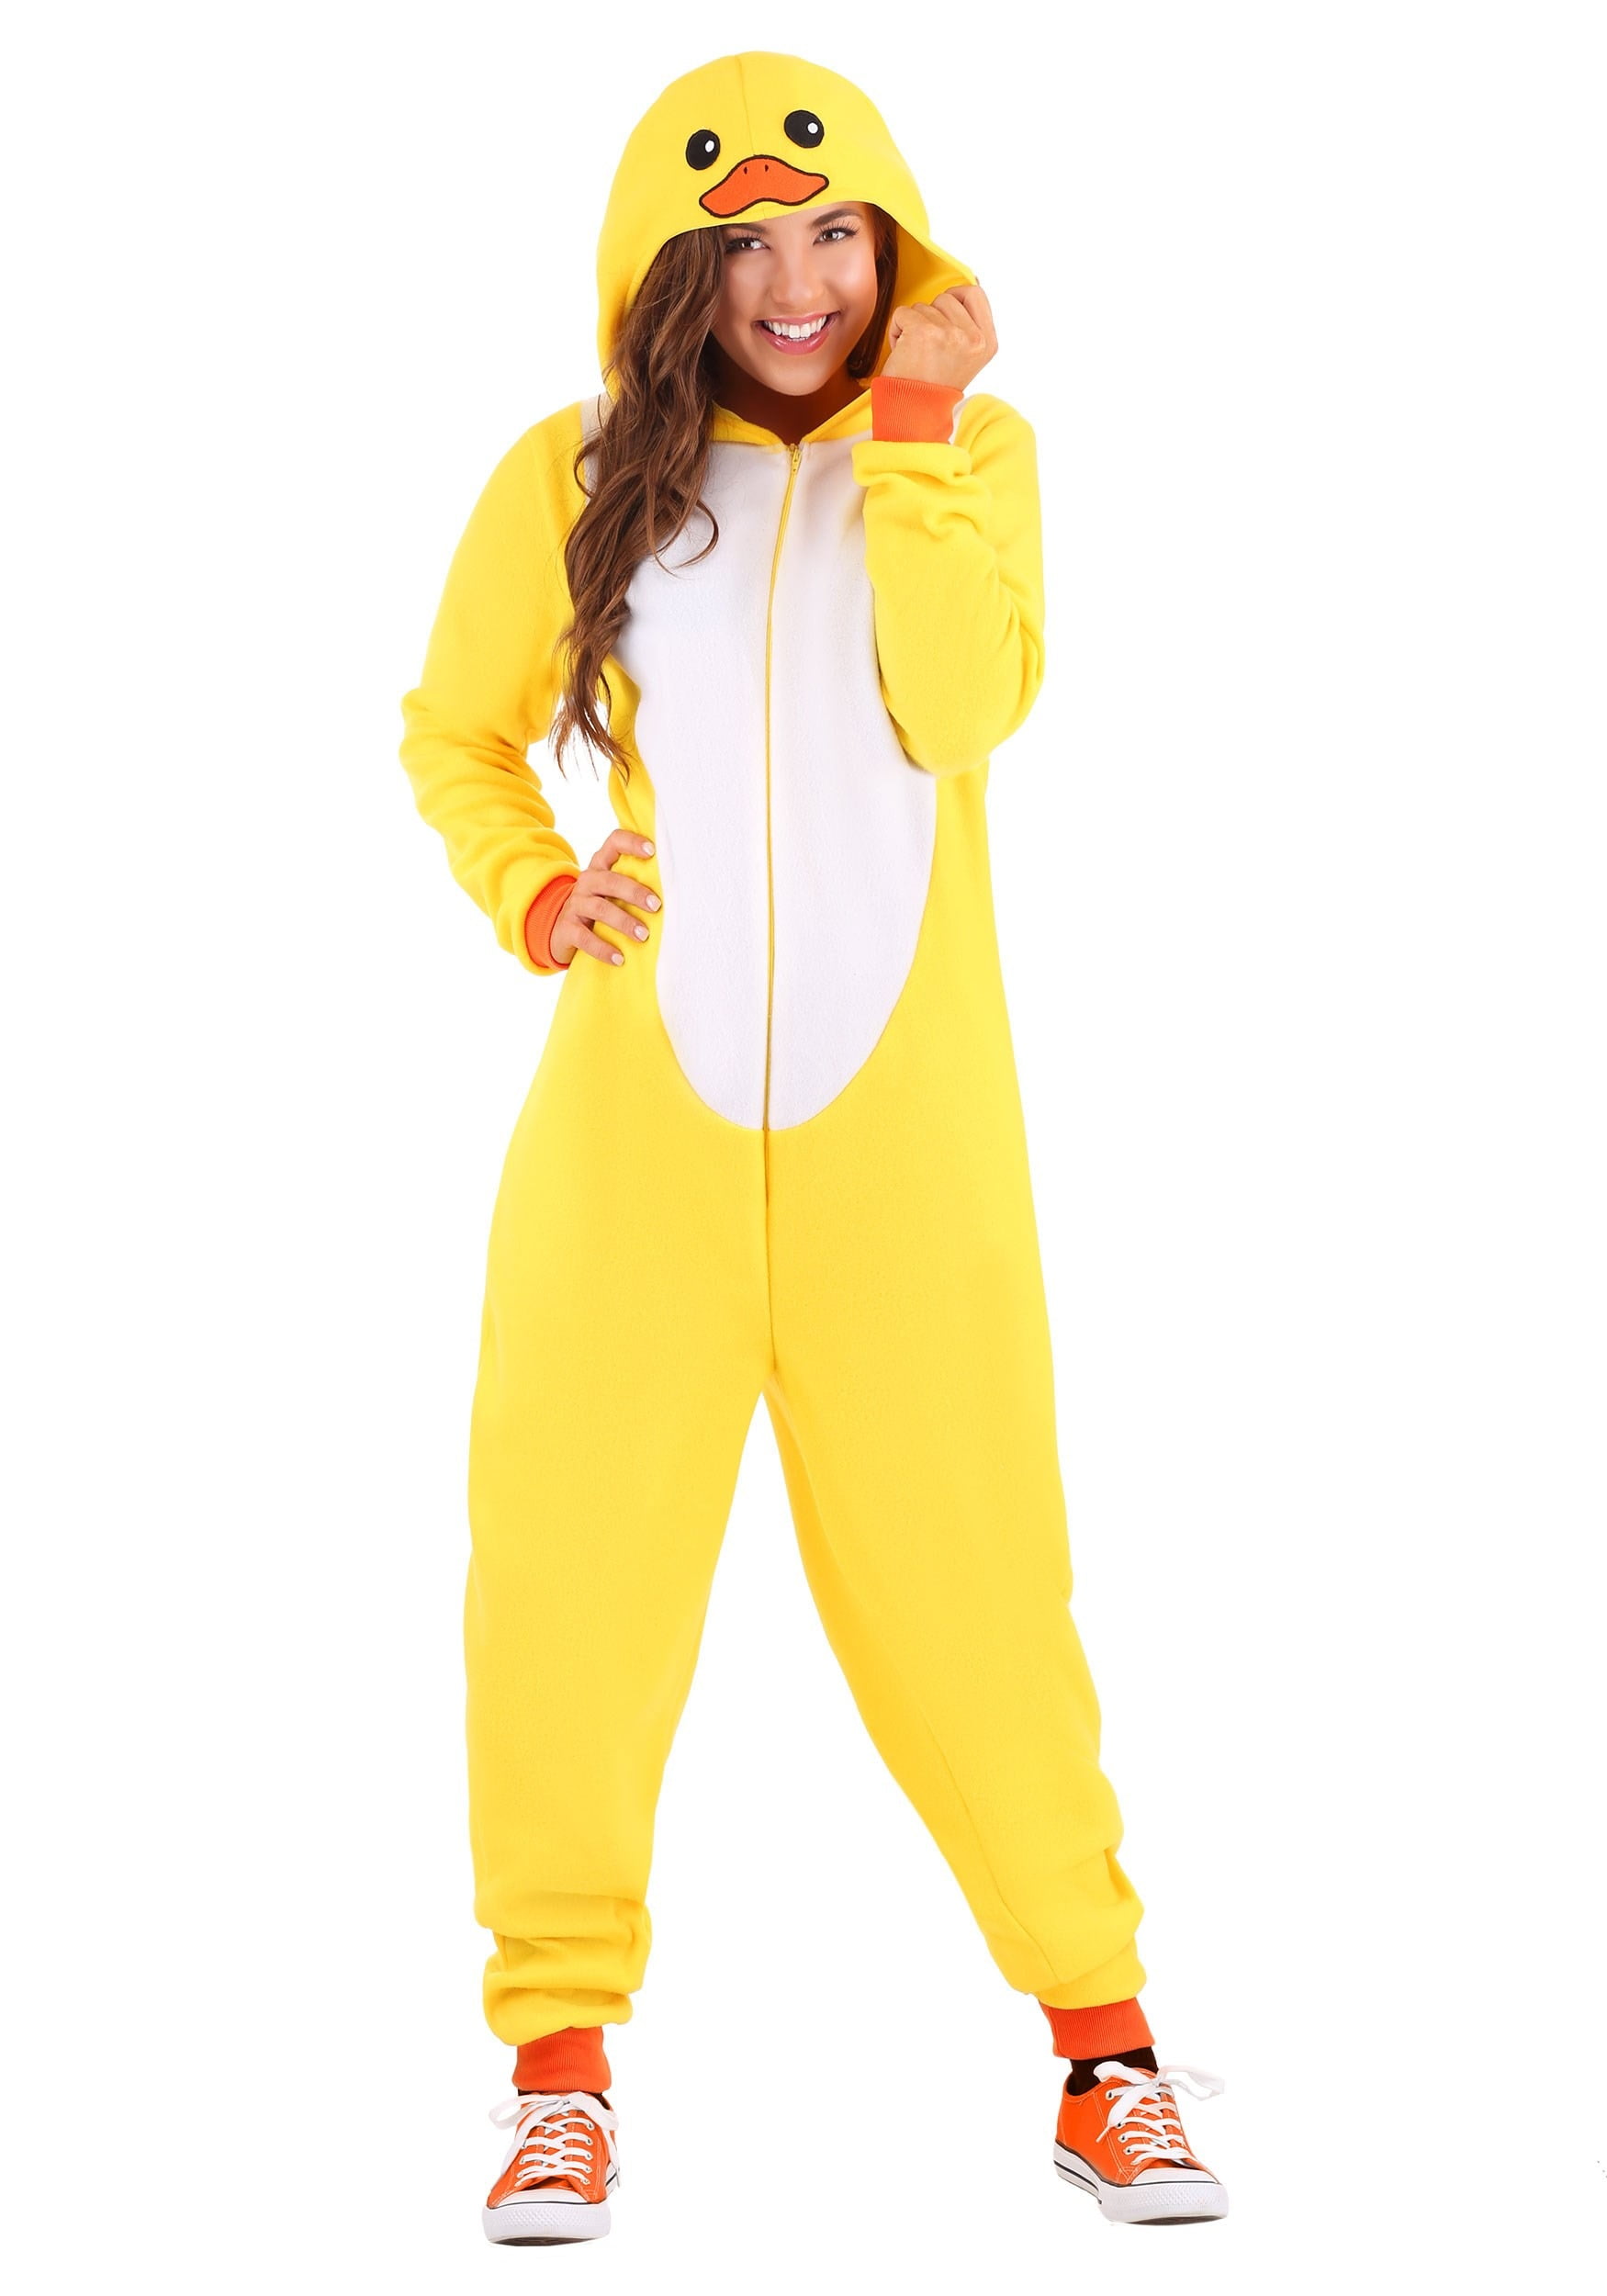 FUN Costumes Yellow Duck Onesie Women's Fancy-Dress Costume for Adult, S 